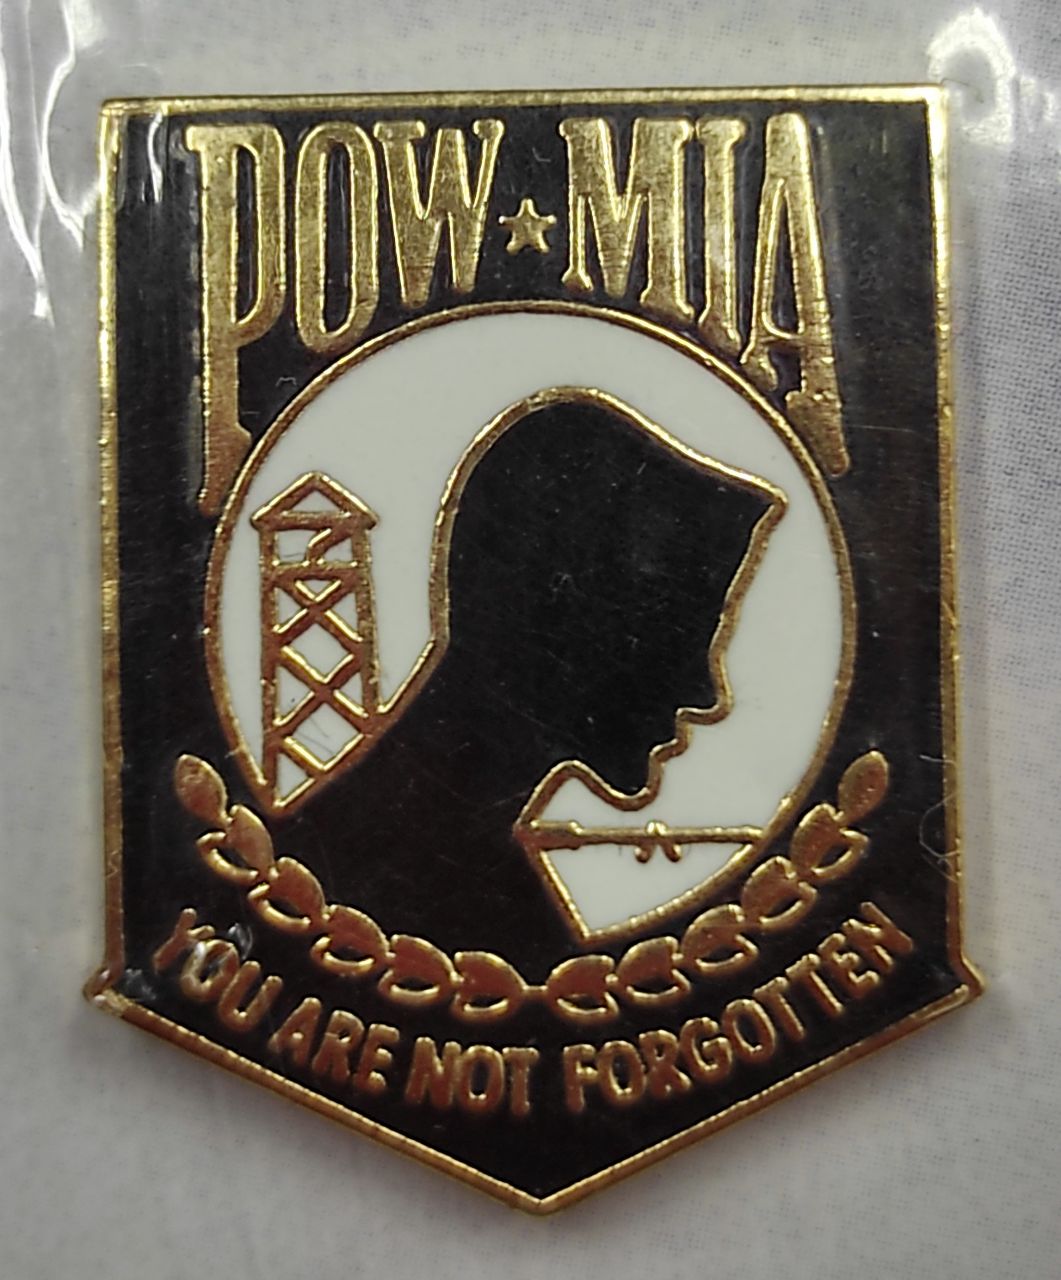 'Pow-Mia' jelvény